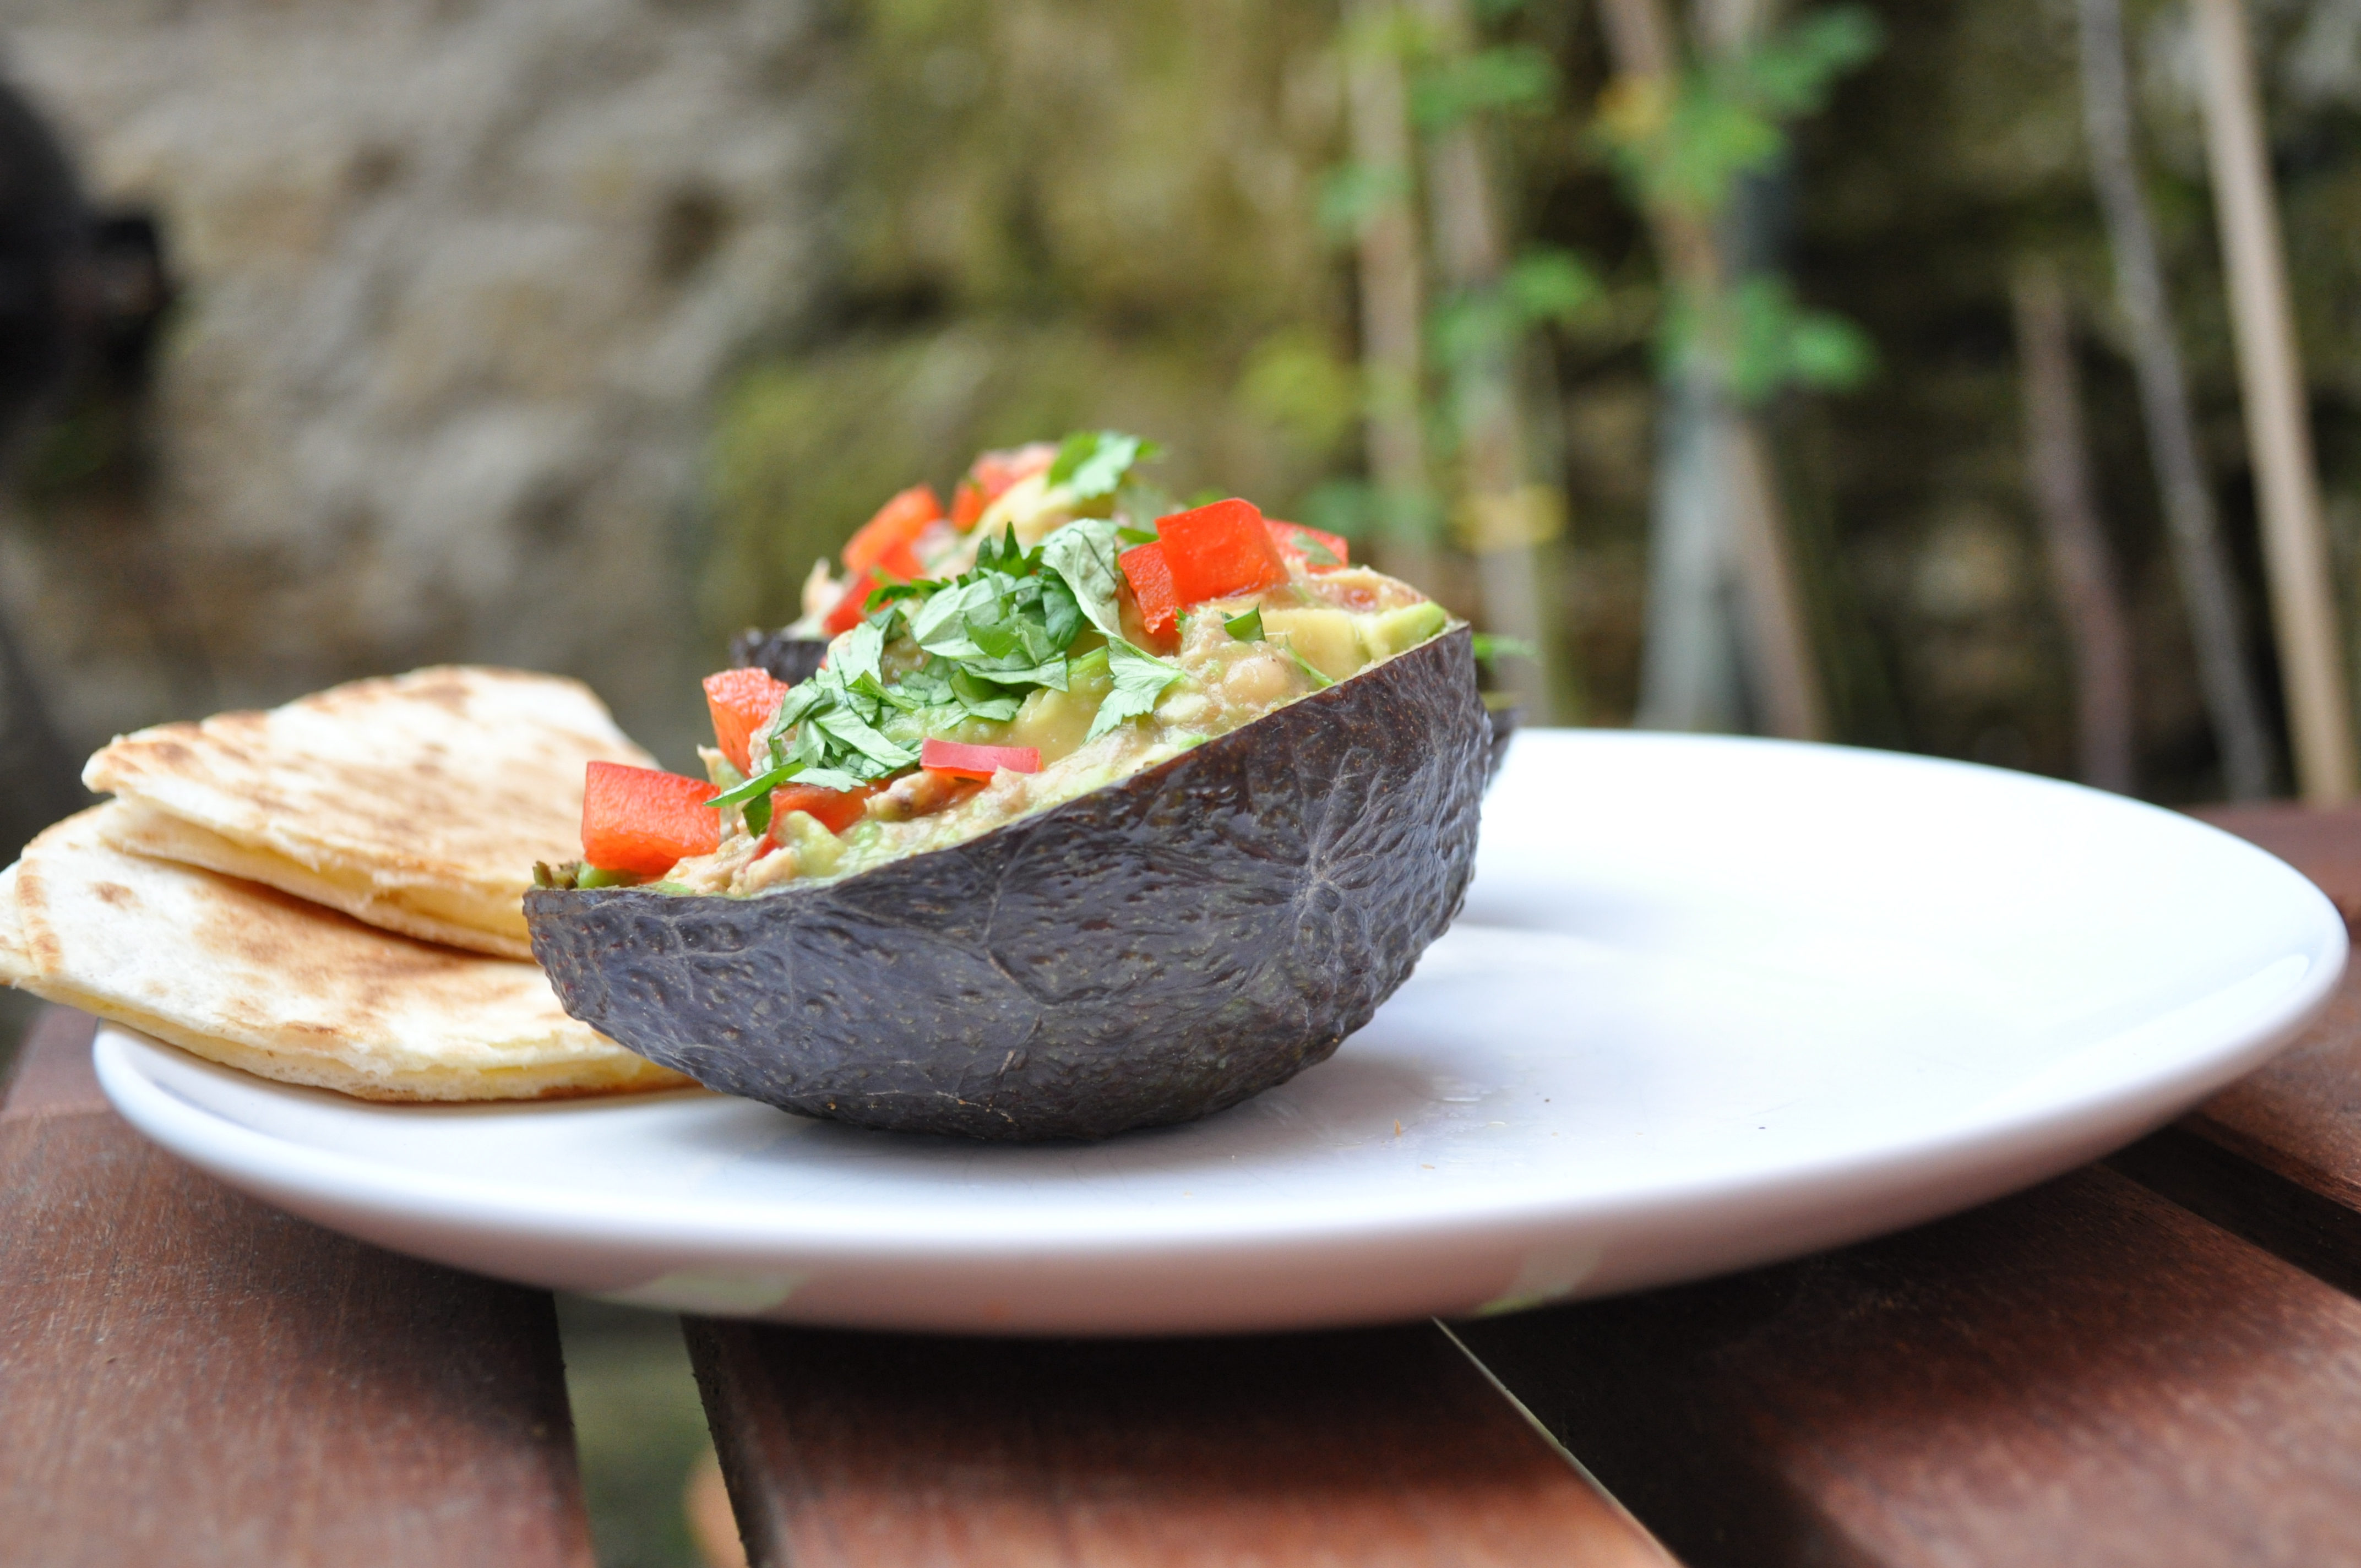 “Eco-cado” (avocado in an eco-bowl)